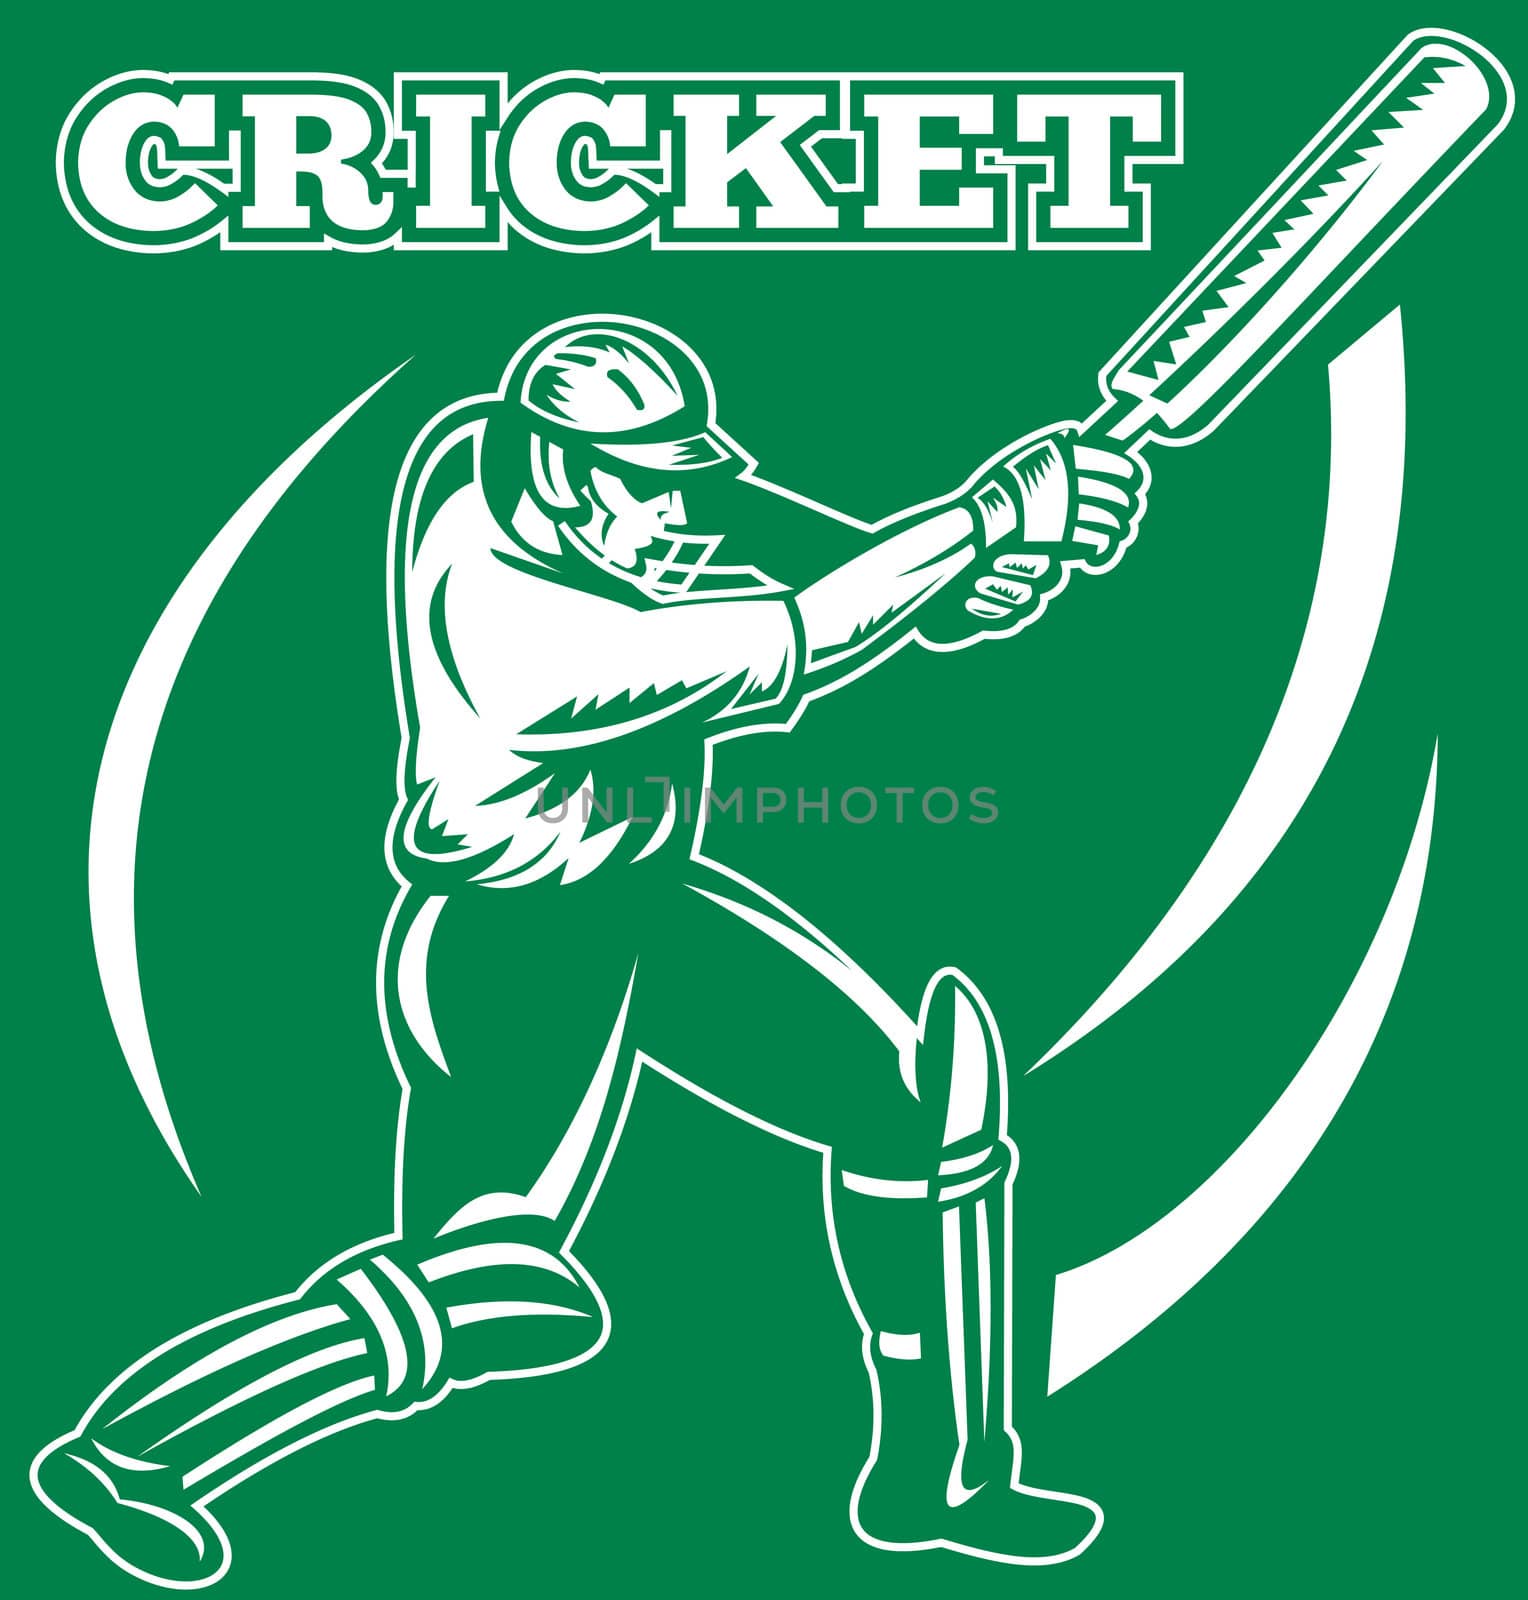 cricket player batsman batting by patrimonio